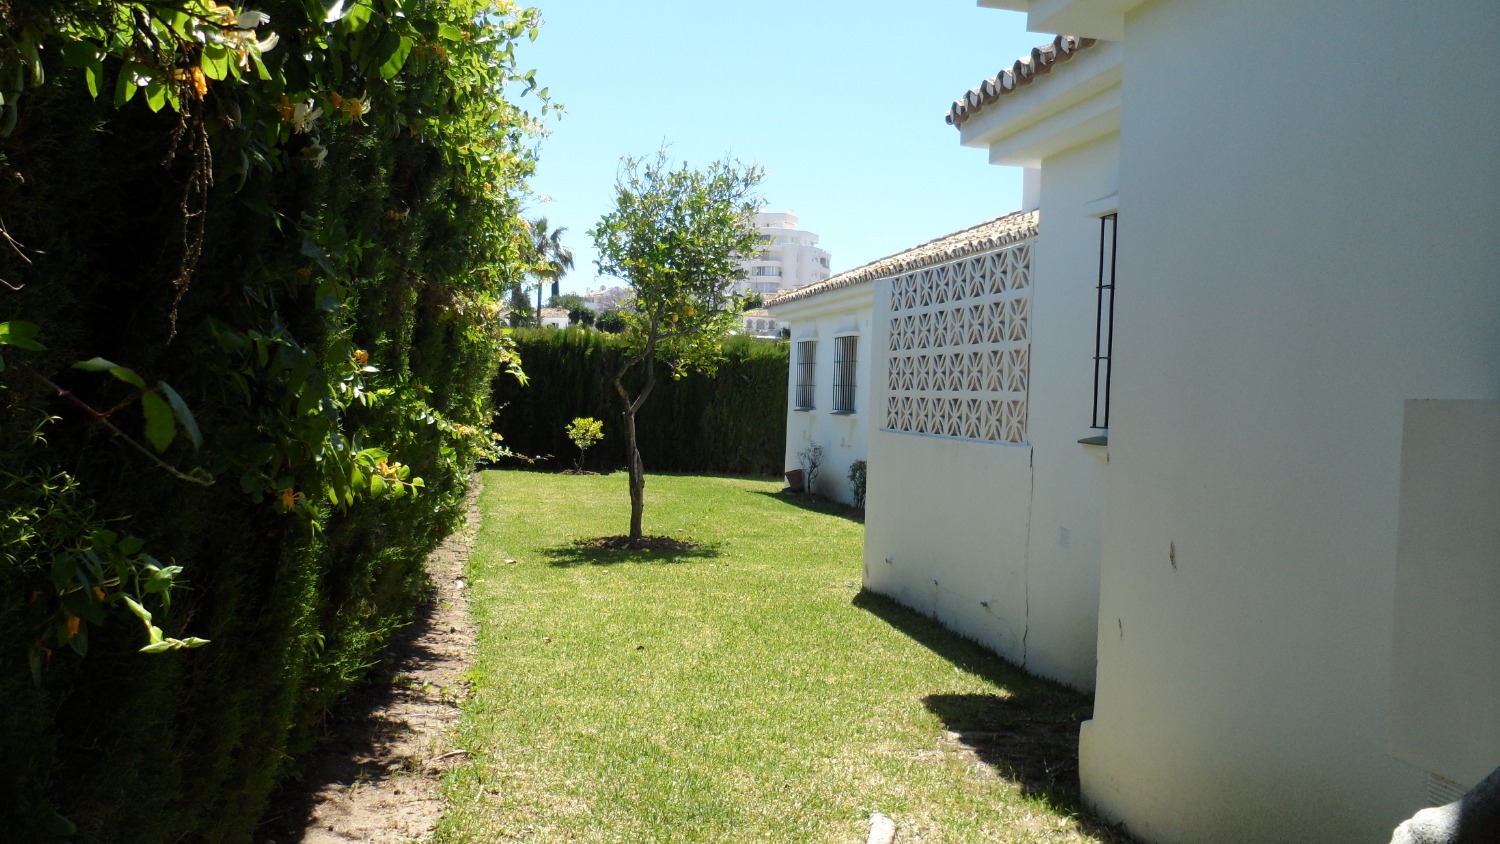 Independent villa near golf courses, Guadalmina